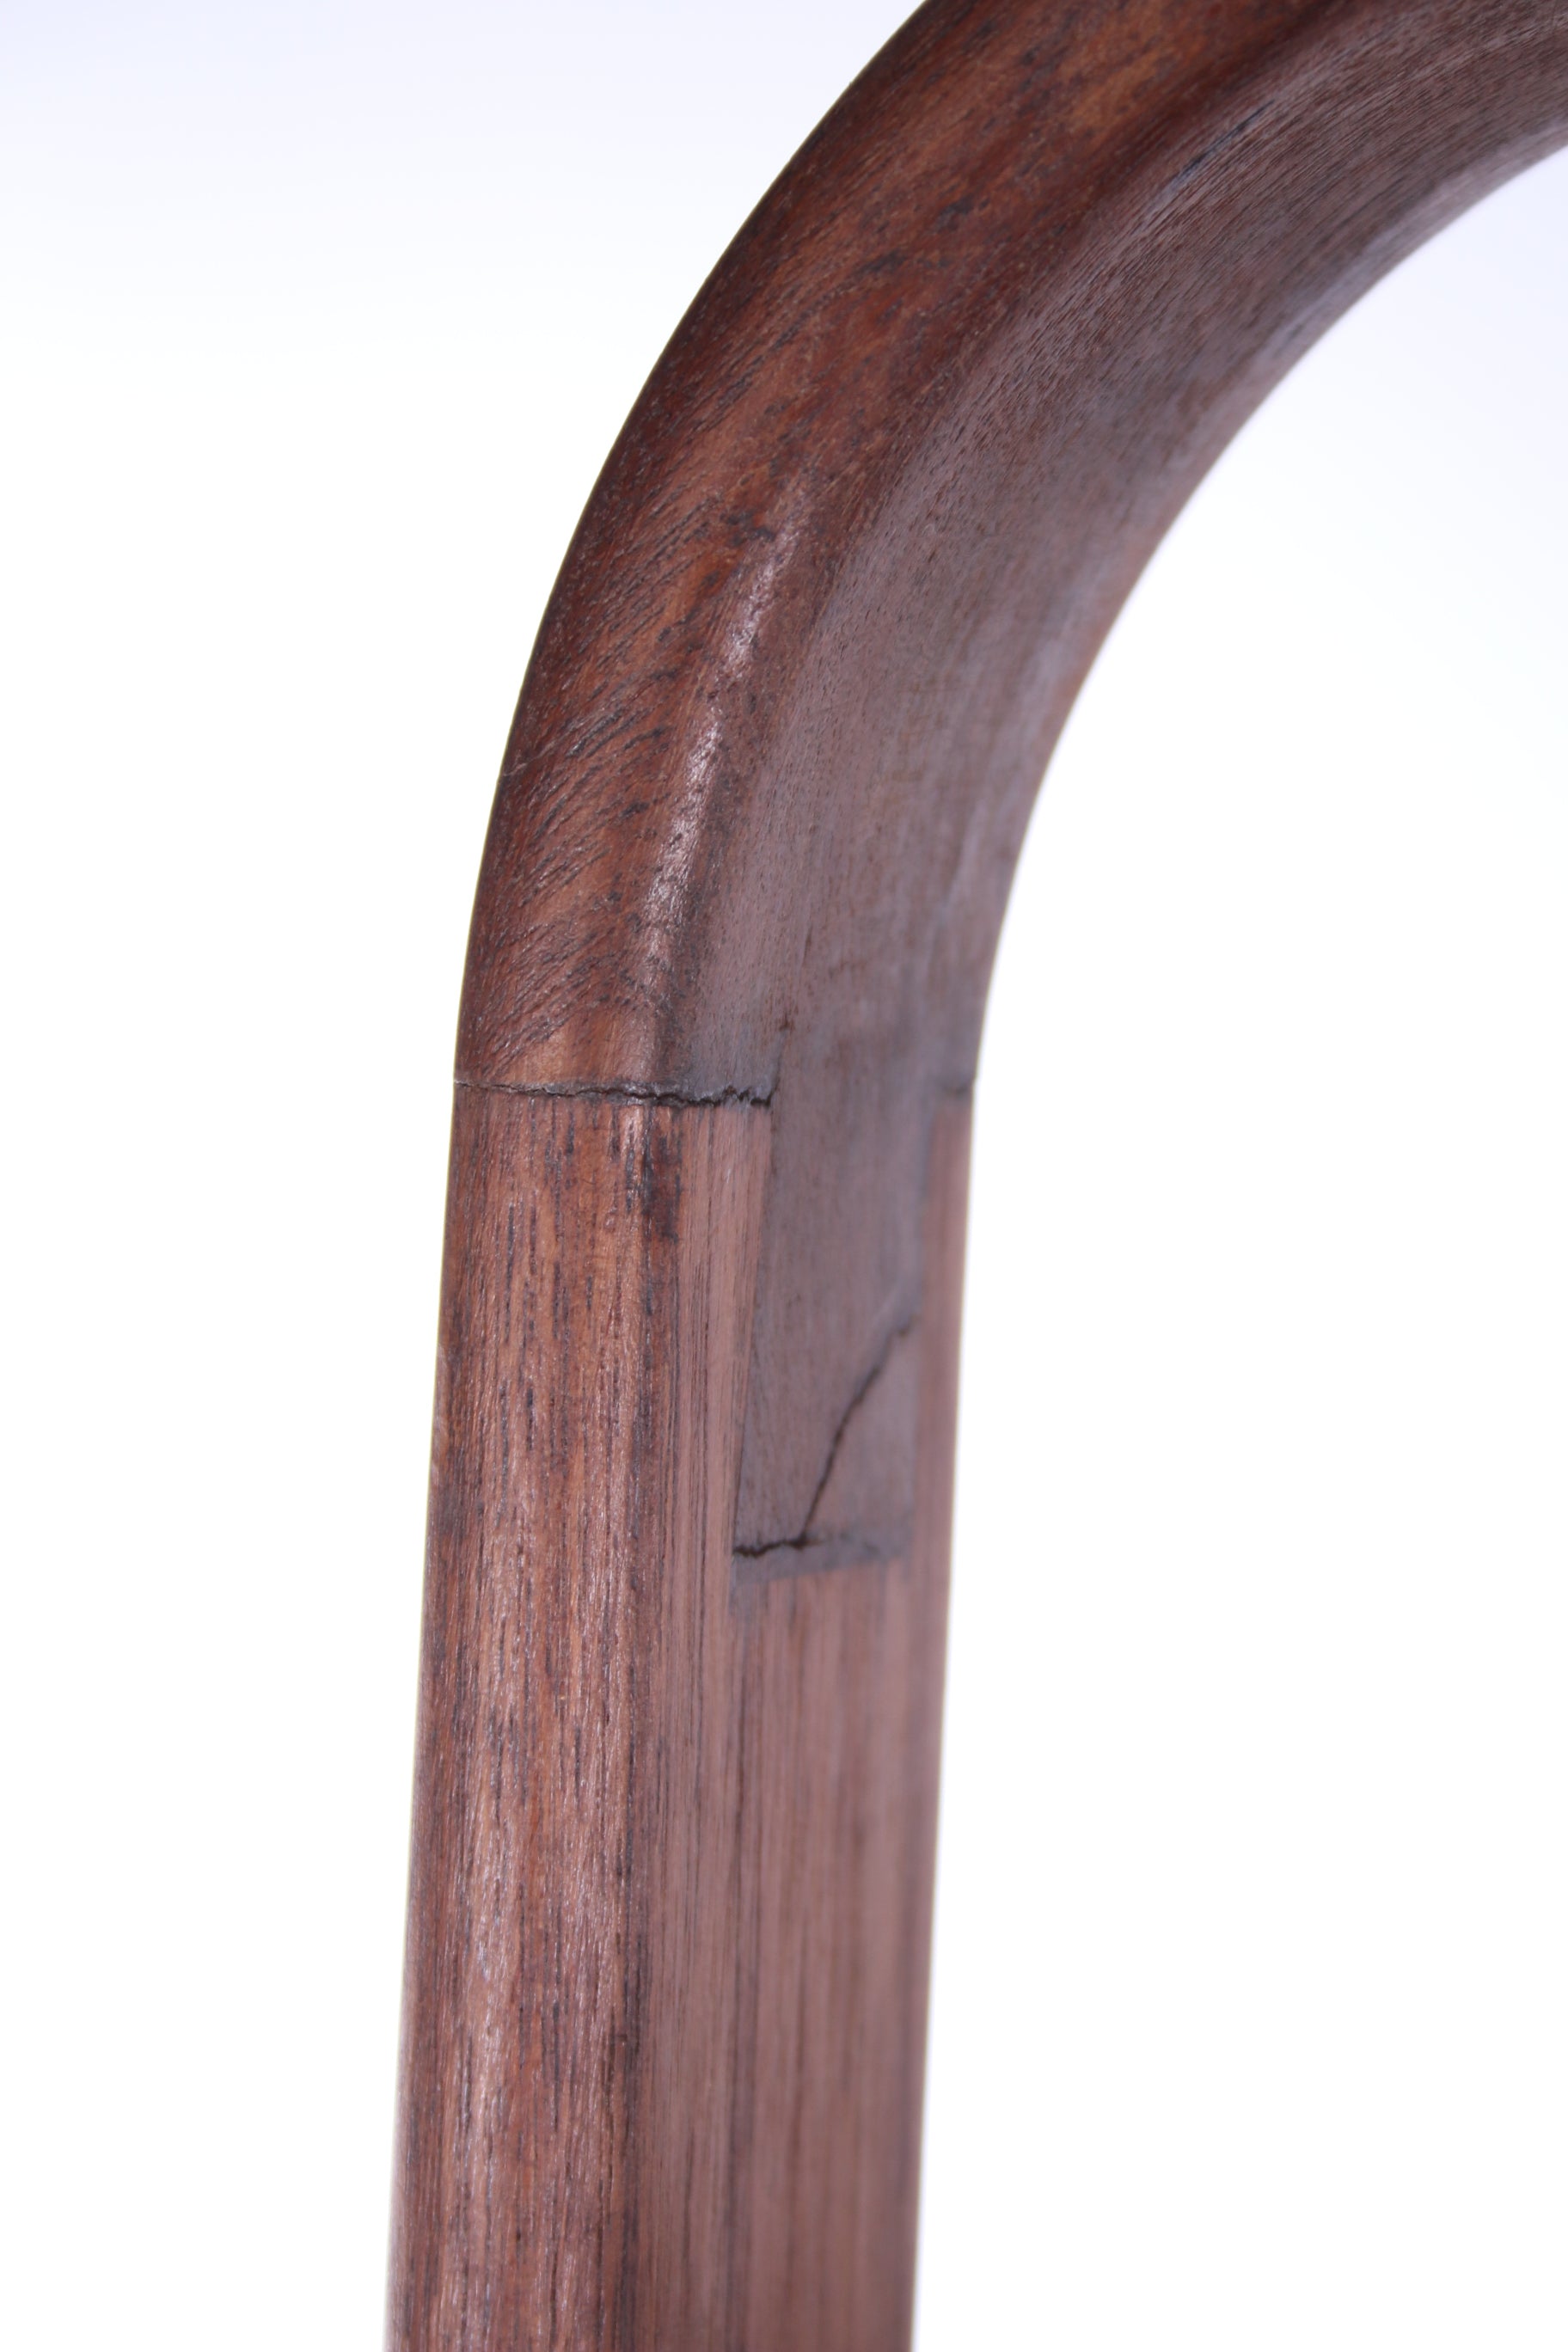 Stoer Wandmeubel boekenkast van hout detail rand boven